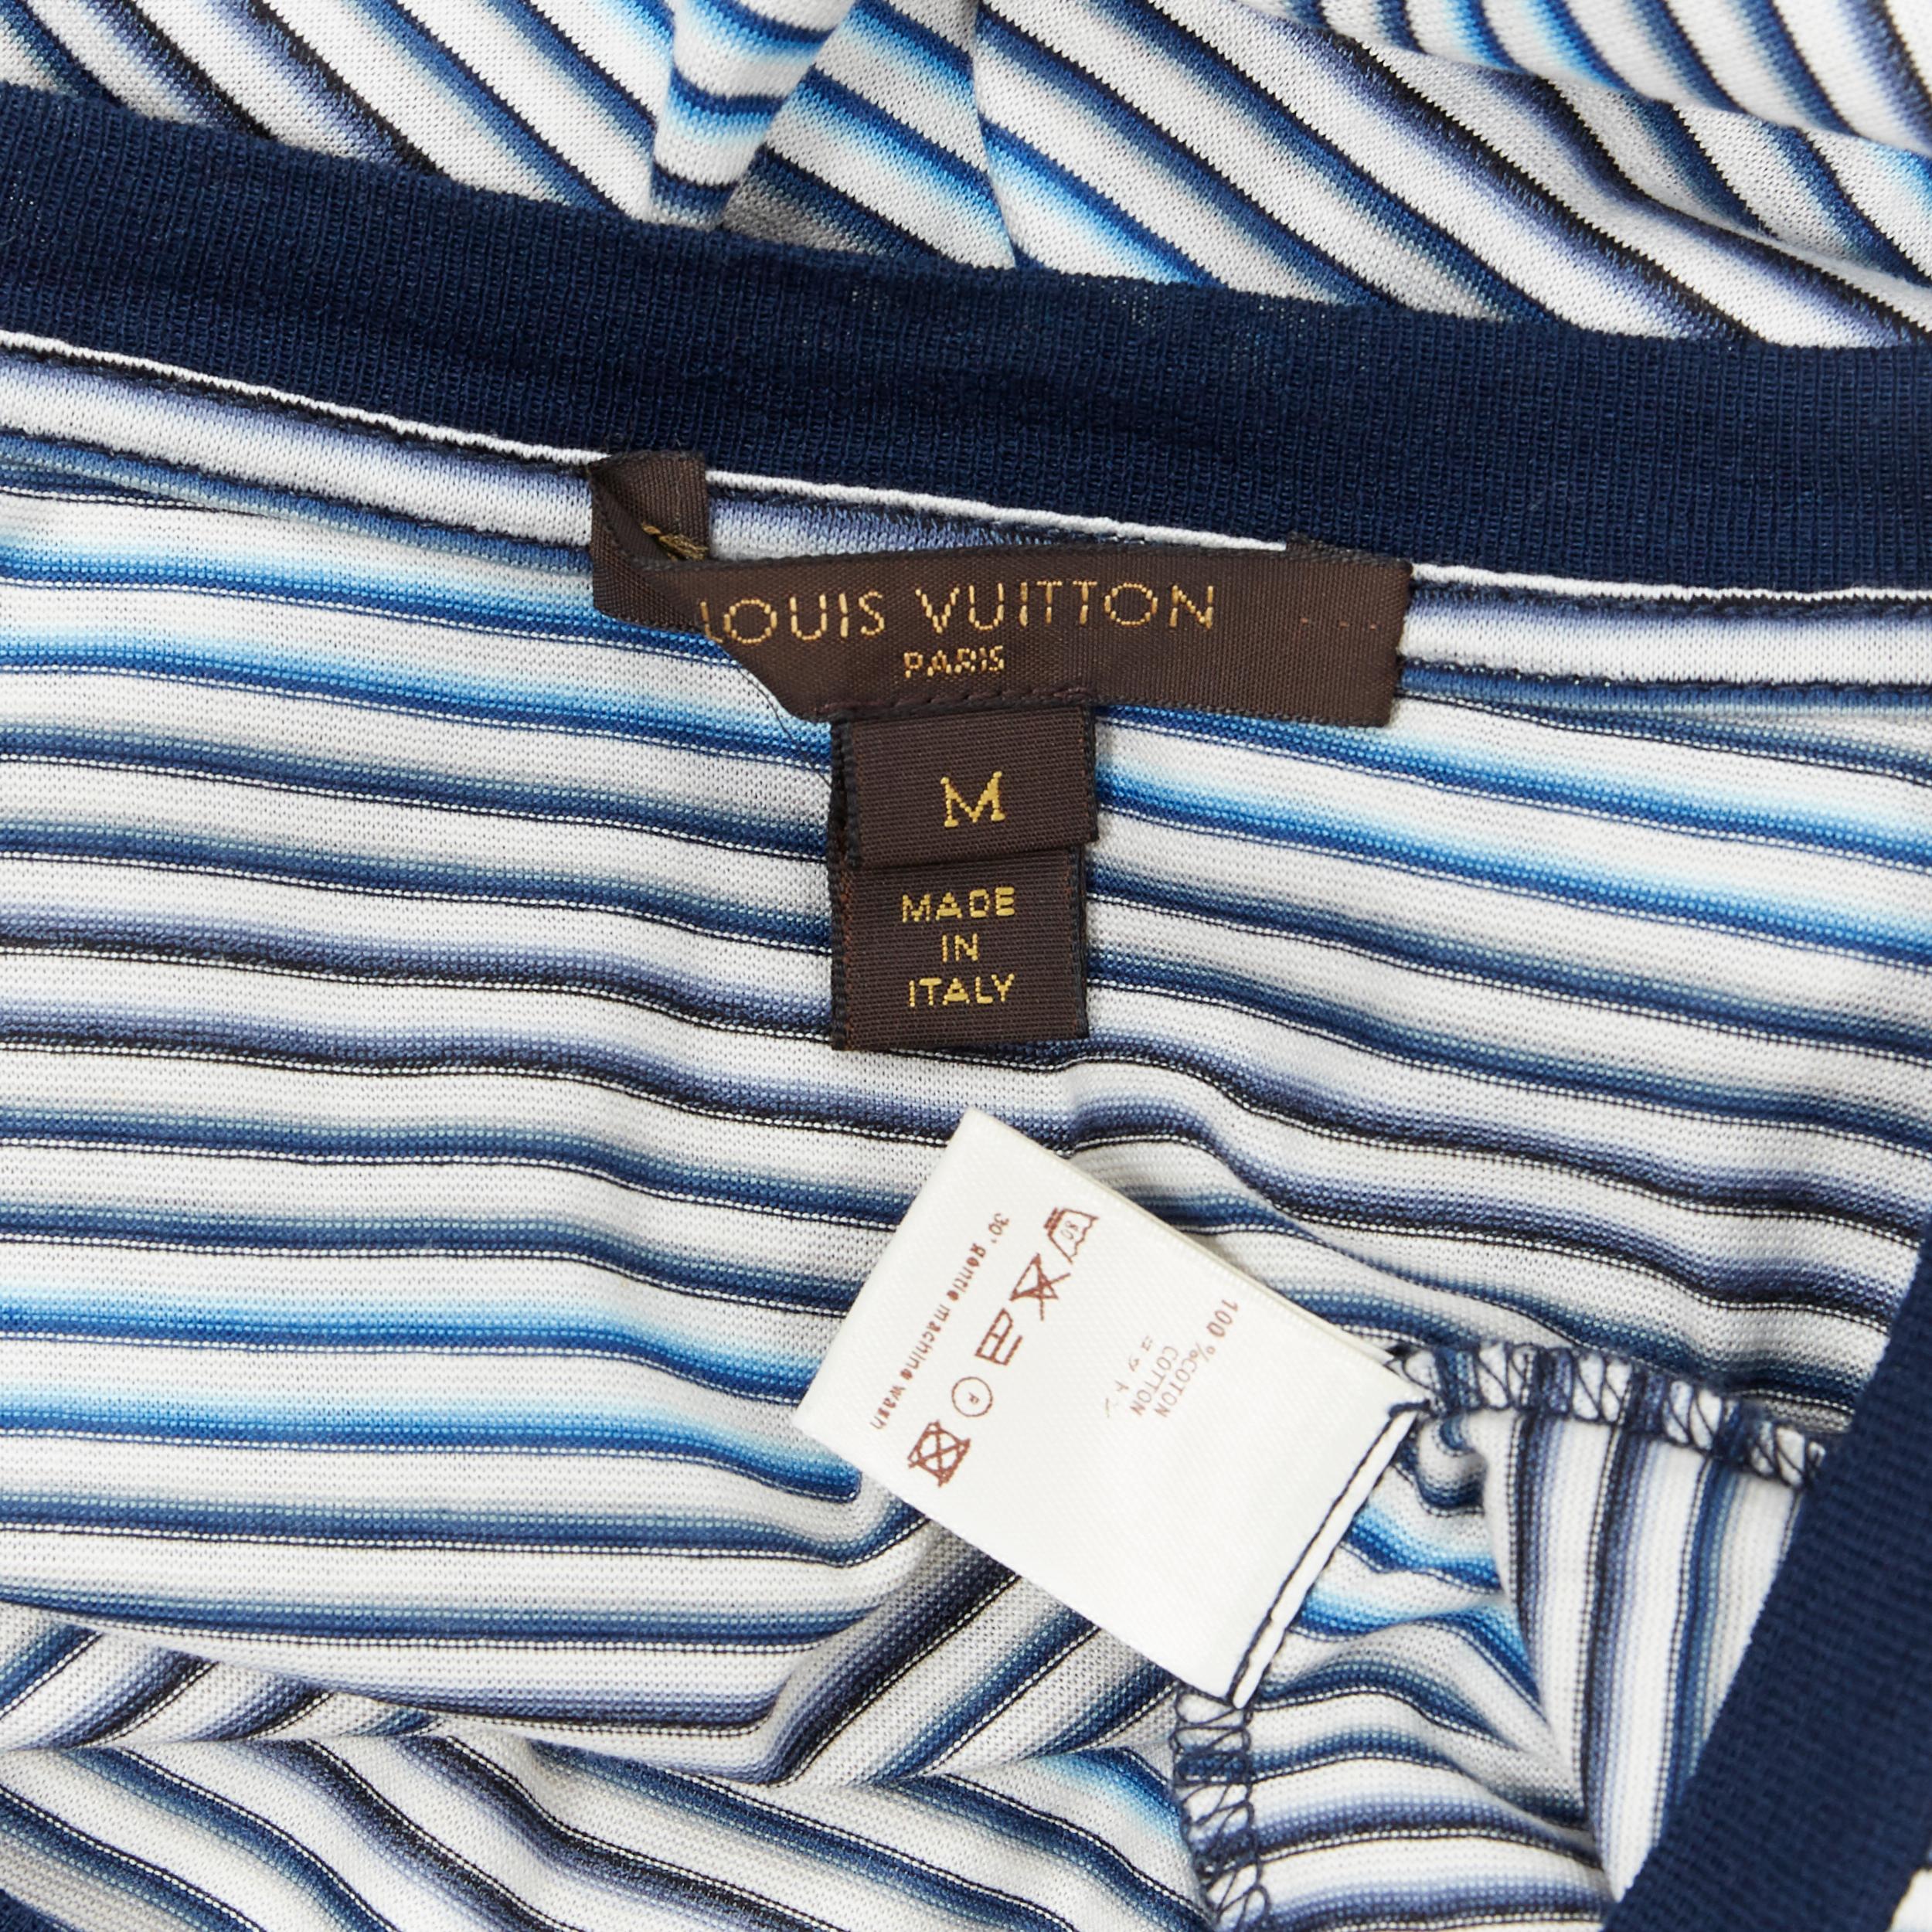 LOUIS VUITTON cotton navy blue stripe embroidered crew short sleeve t-shirt M 1